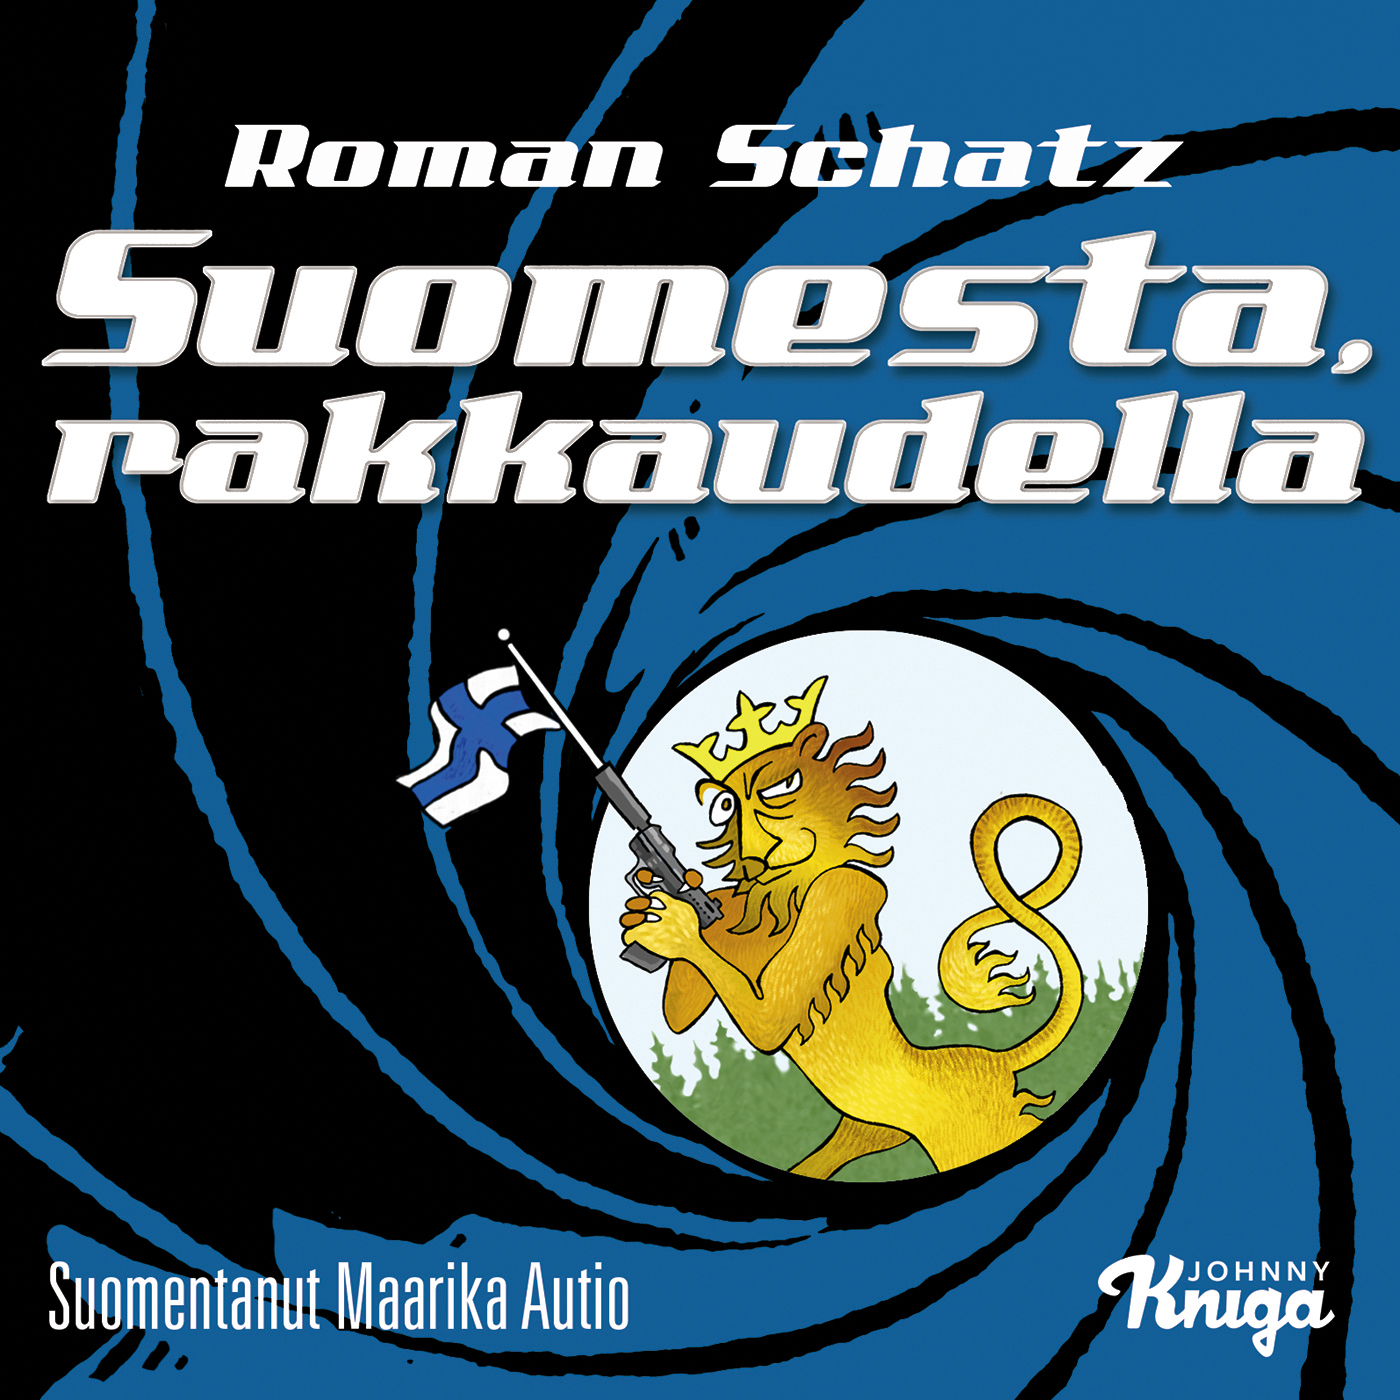 Schatz, Roman - Suomesta, rakkaudella, audiobook